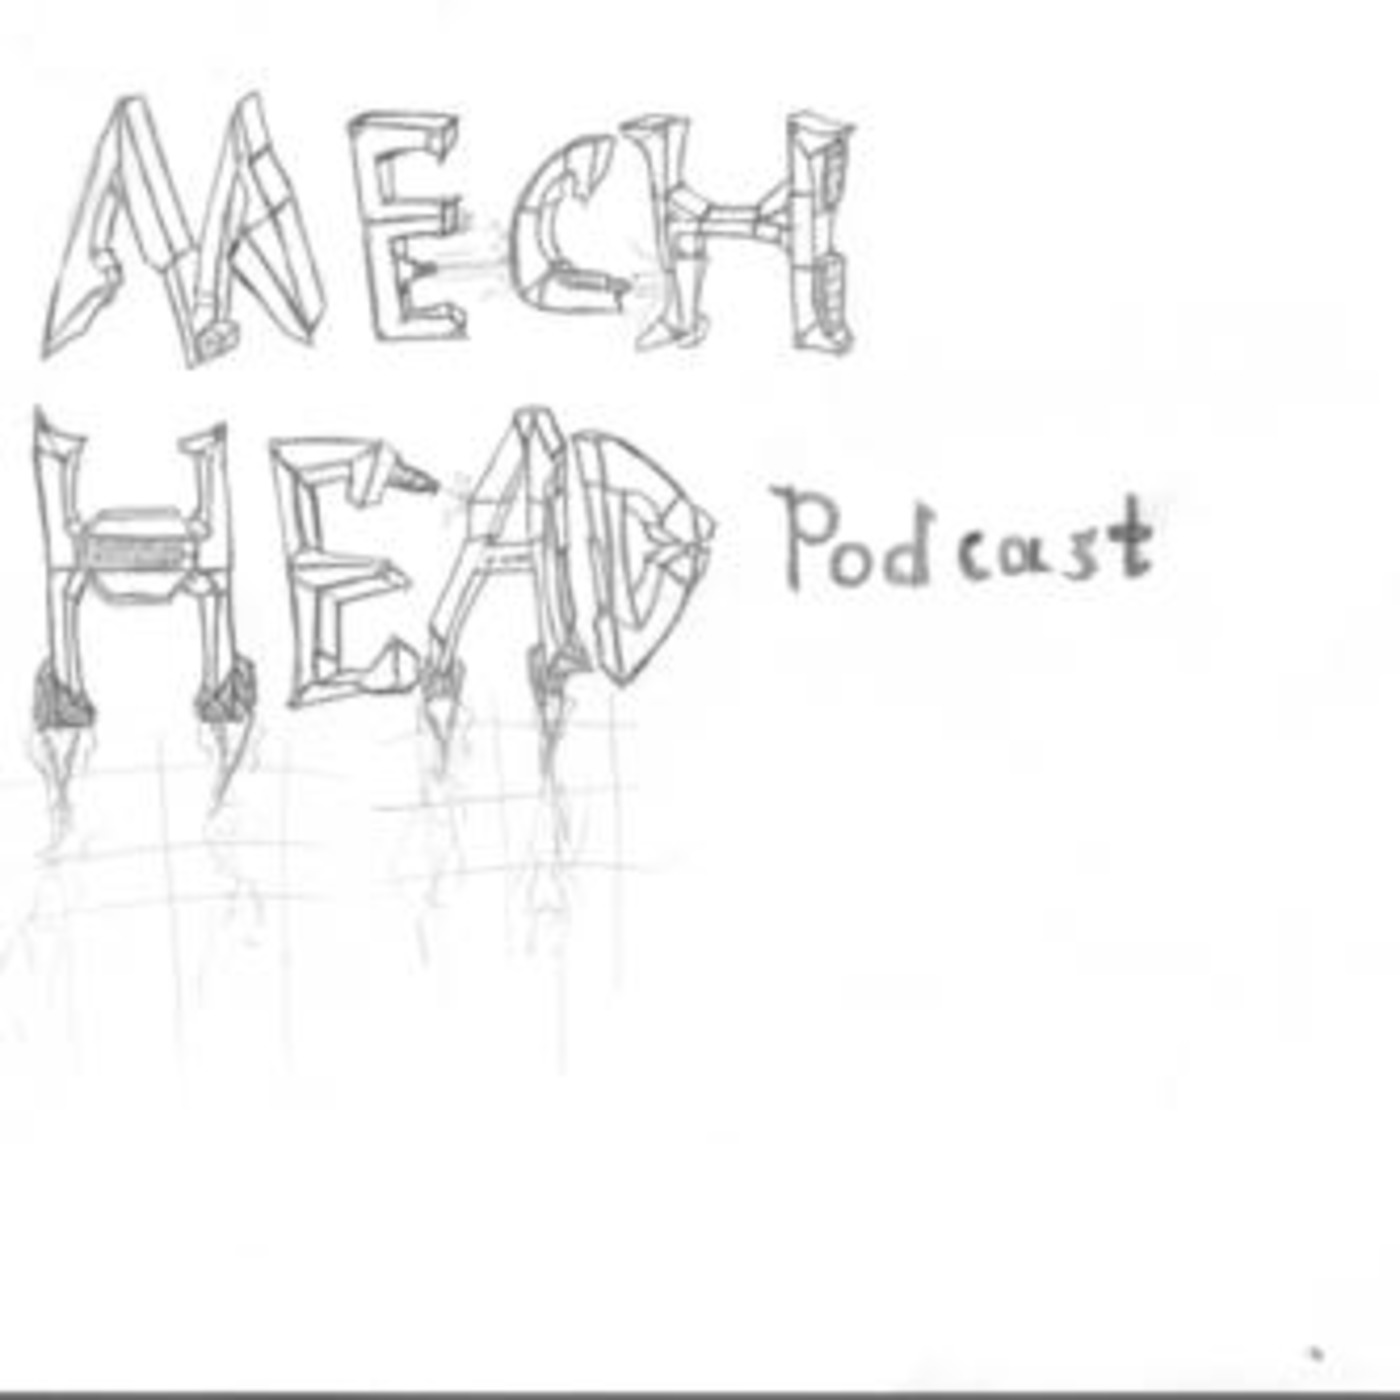 MechHead Podcast #23!